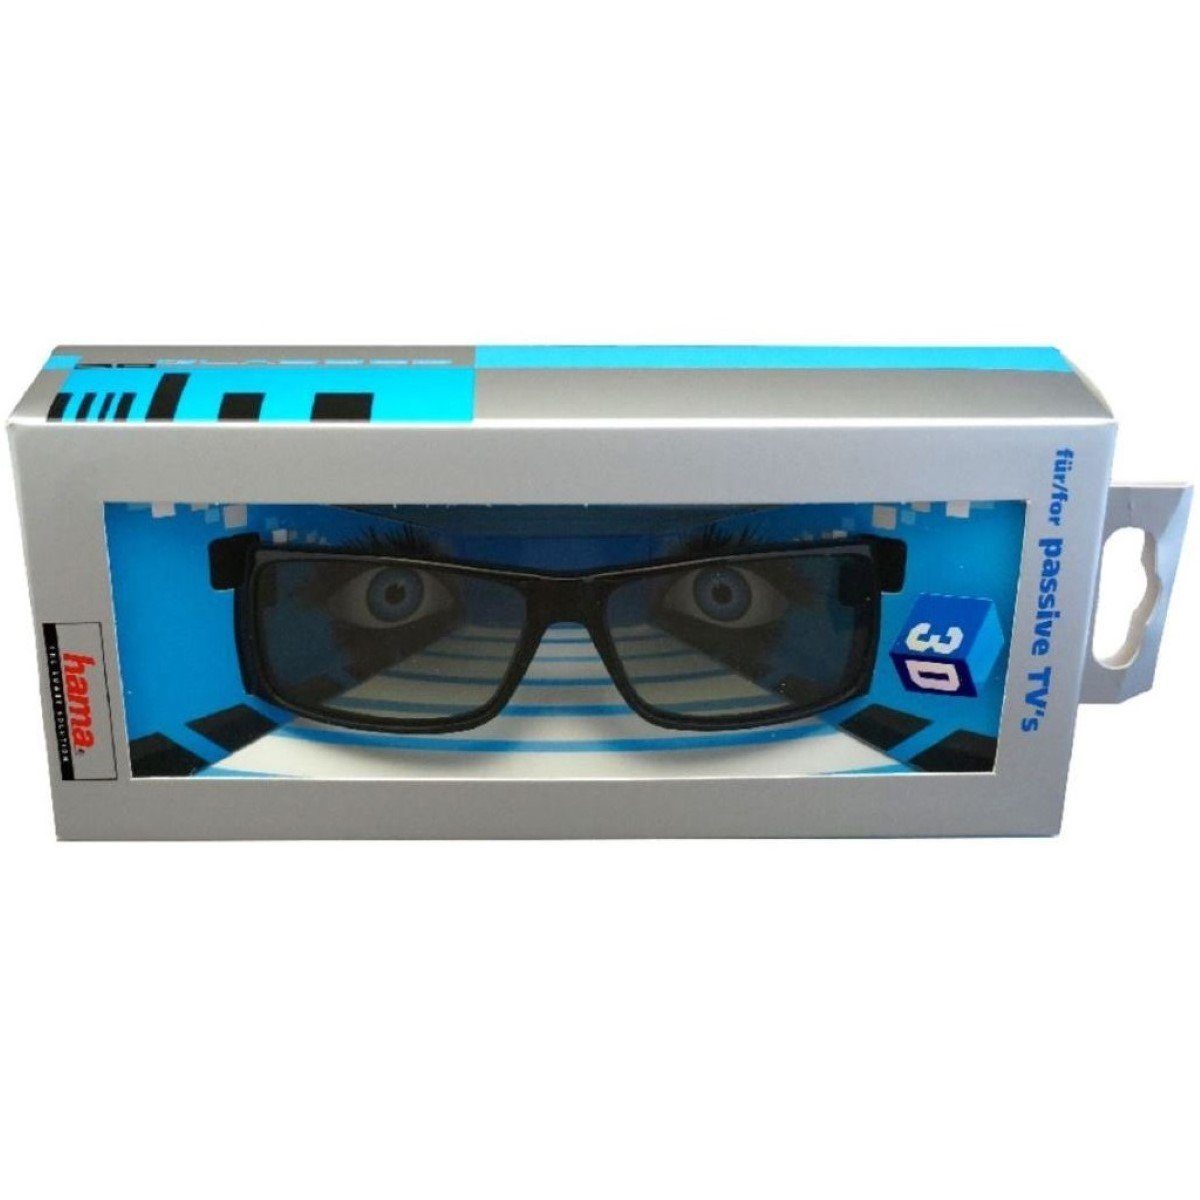 3D-Kino 3D-Brille Passiv HD TV 3D Brille Zertifizierung Masterimage Polarisation Hama Polfilterbrille Passiv Unisex RealD Black,